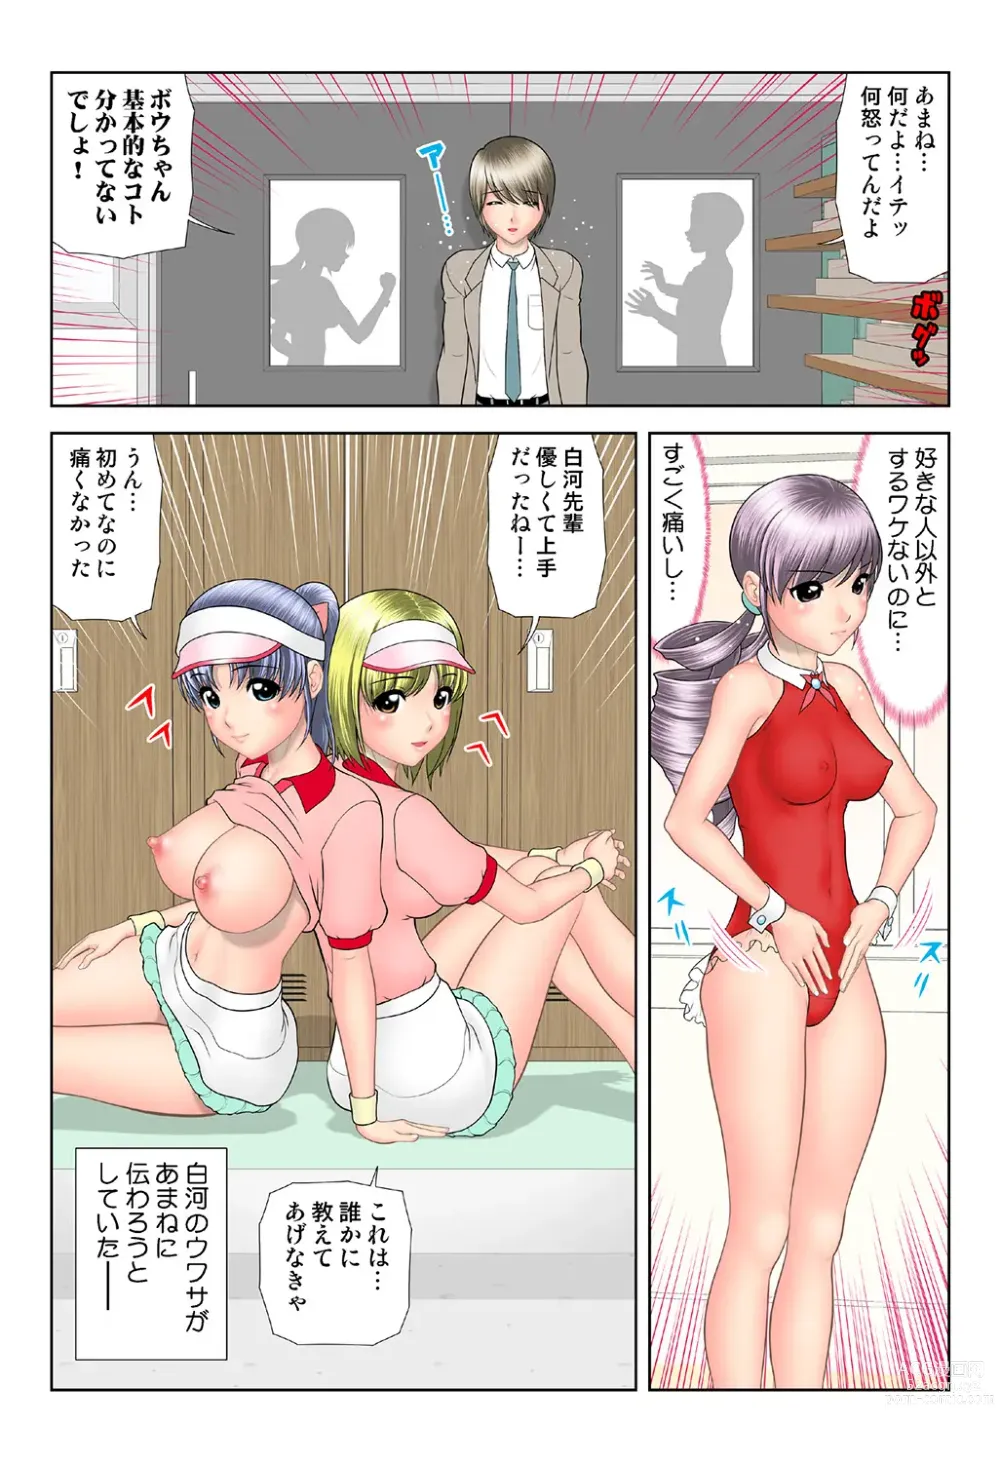 Page 125 of manga HiME-Mania Vol. 42